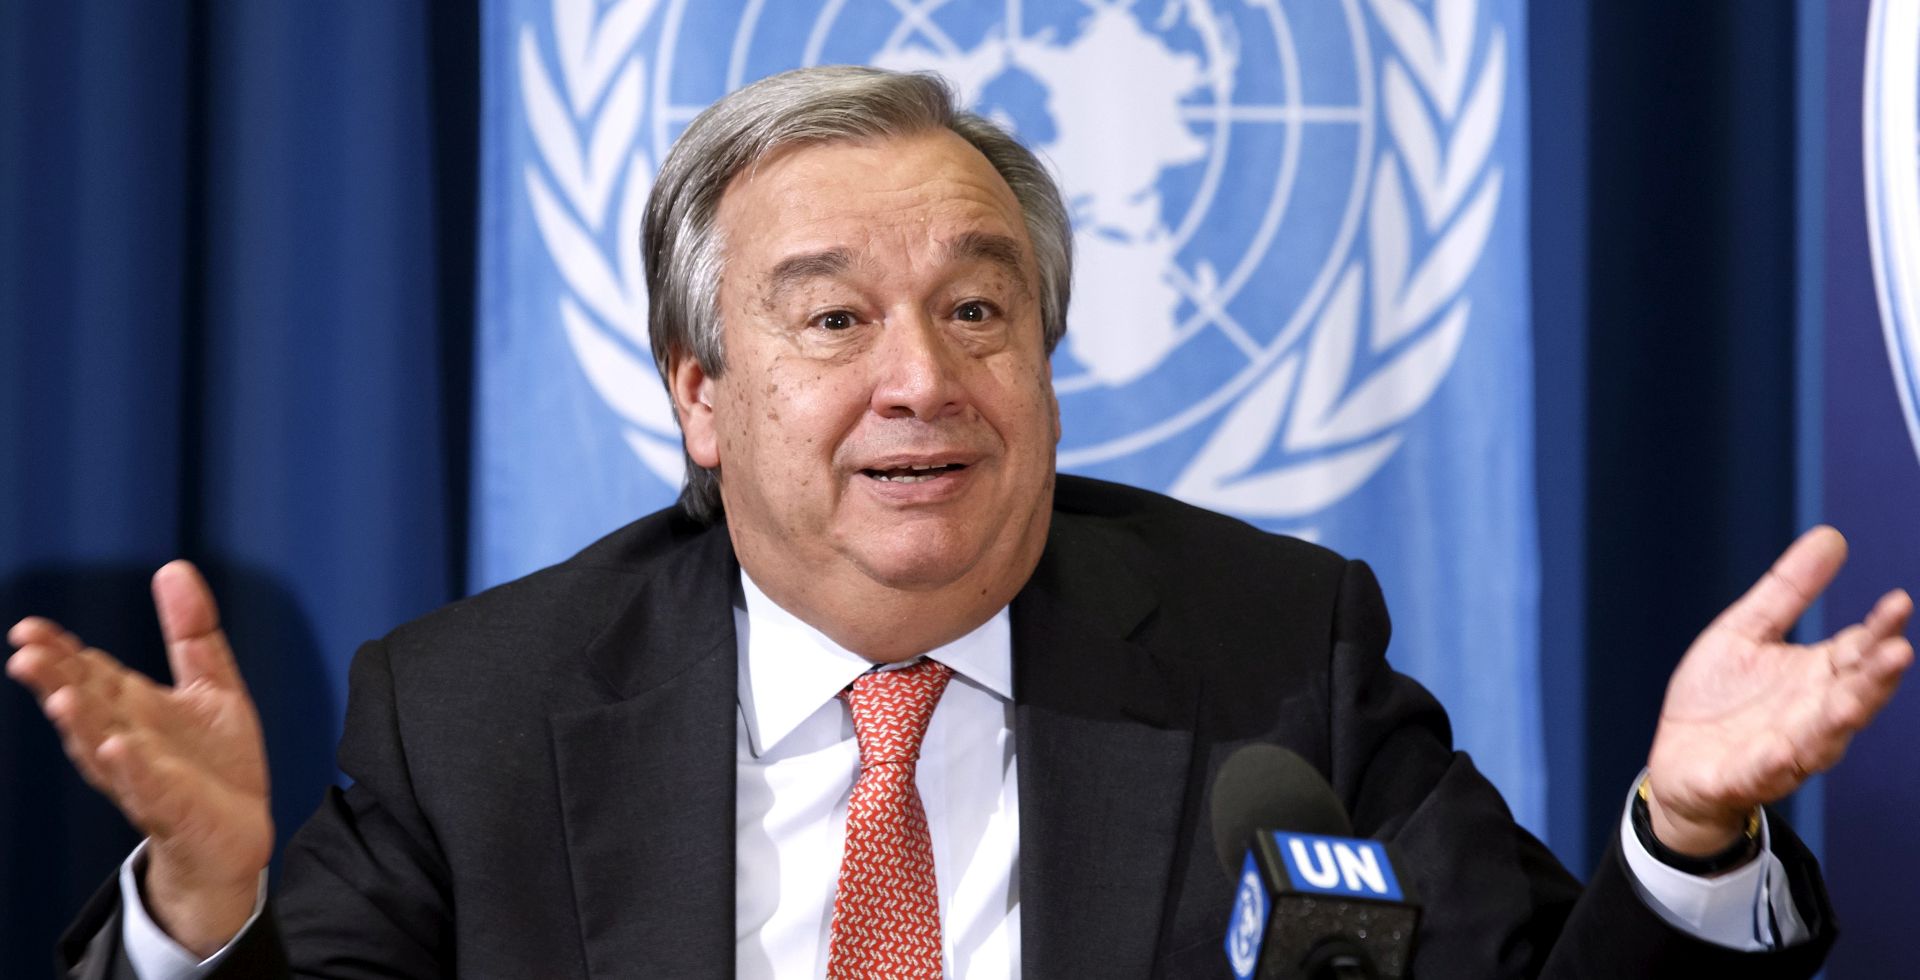 Tko je vjerojatni novi glavni tajnik UN-a Antonio Guterres?